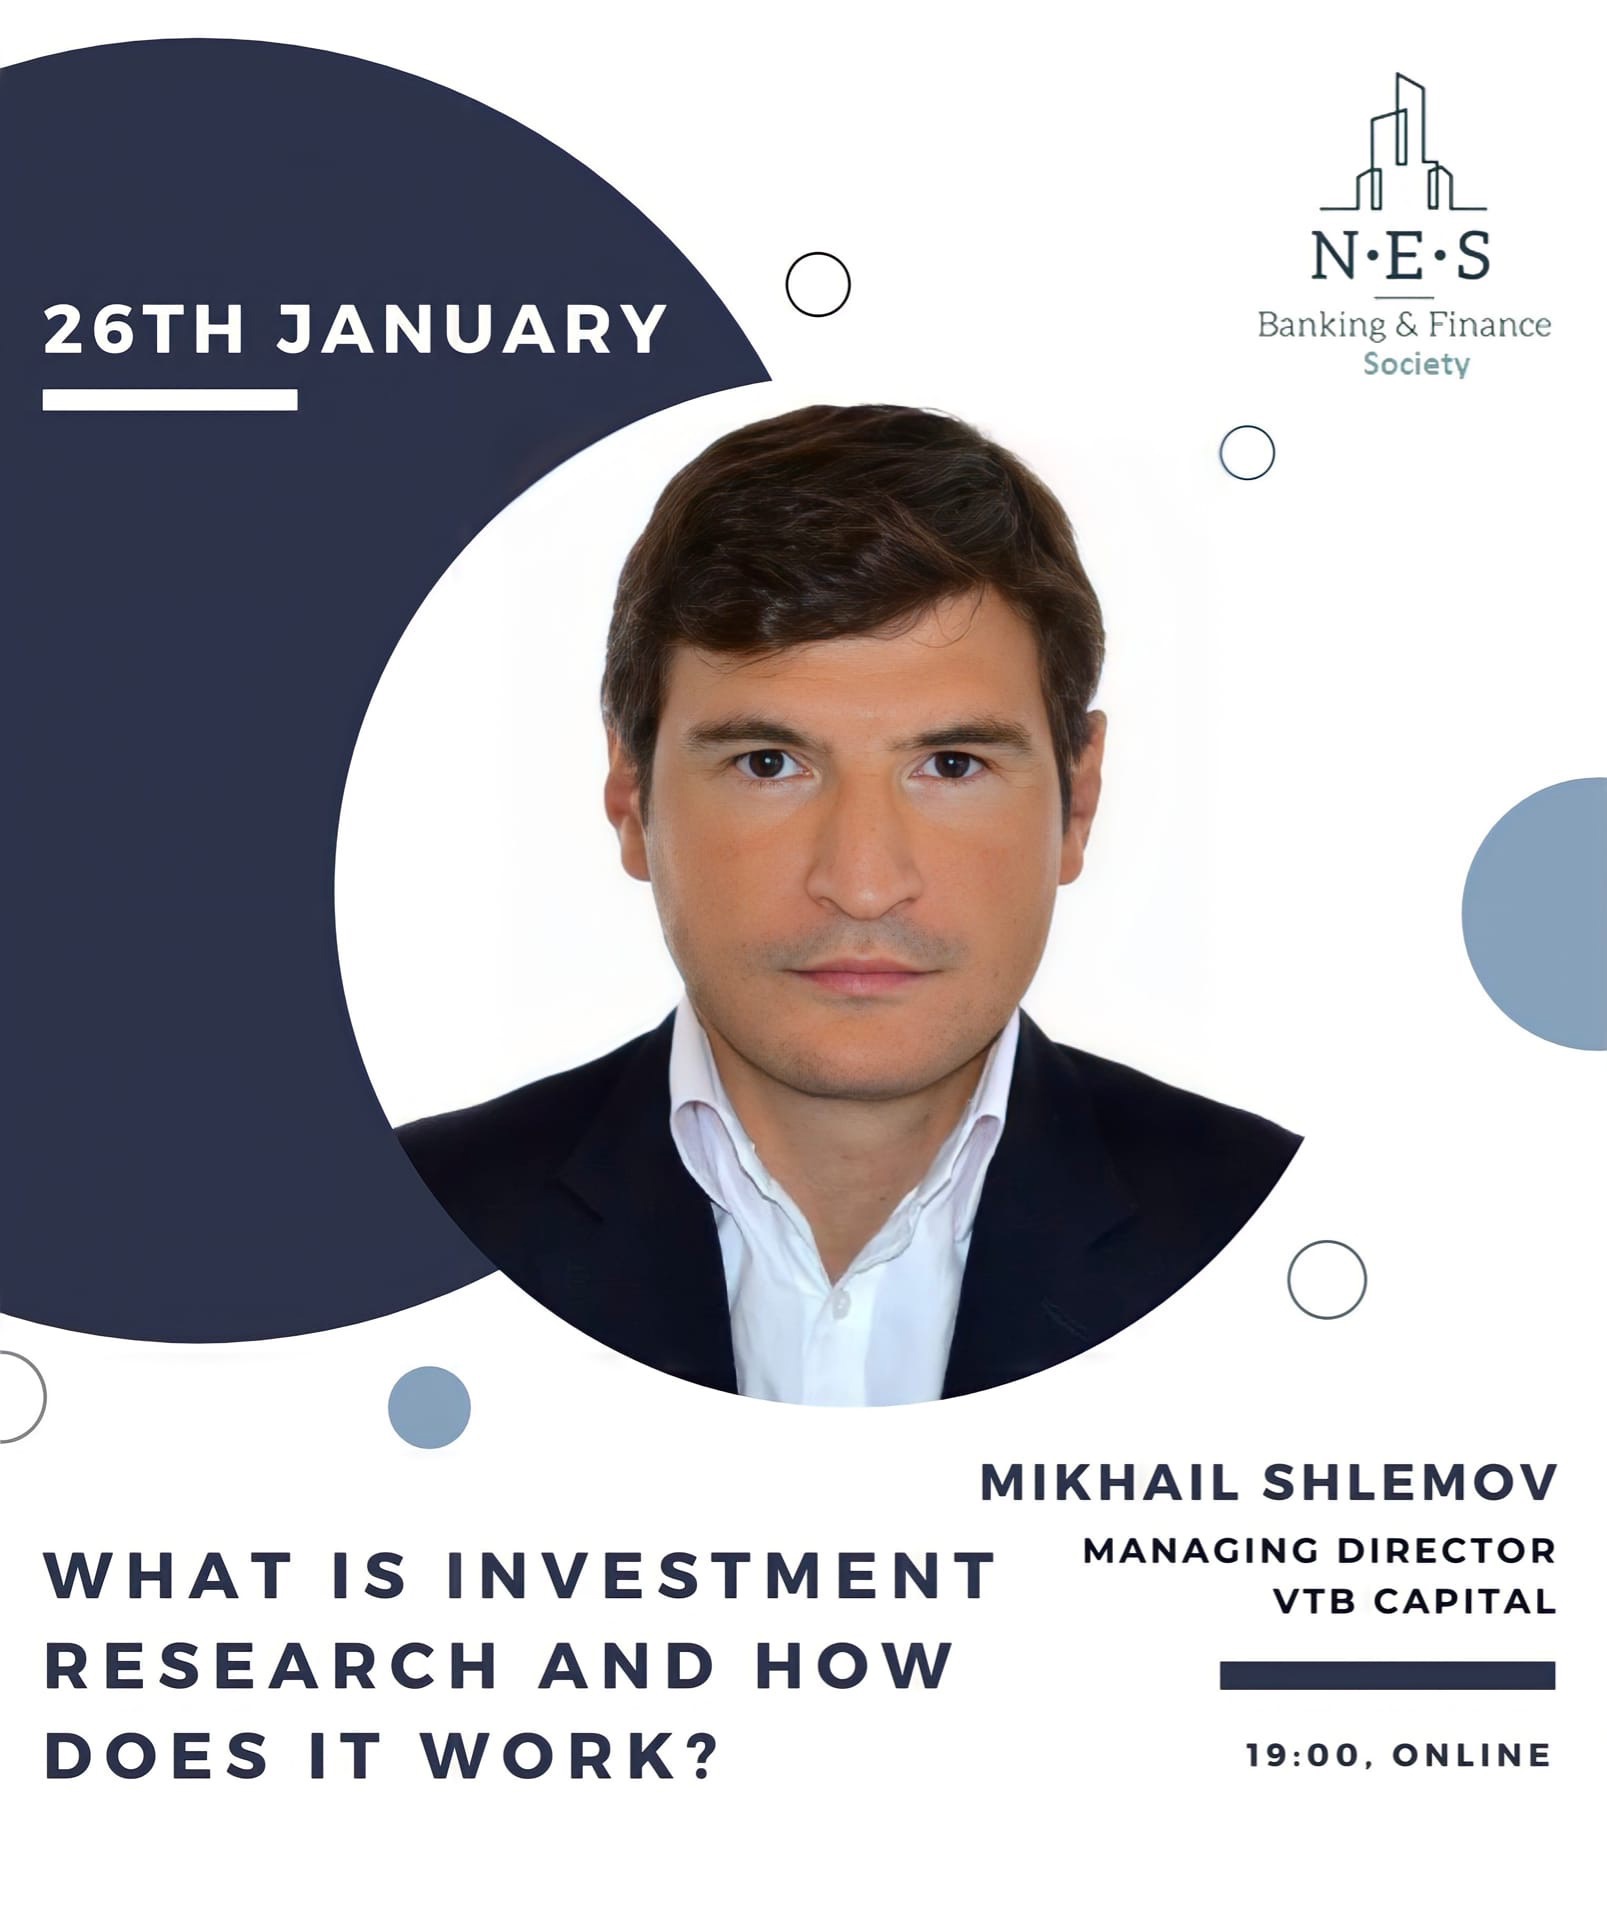 Michael Shlemov – Managing Director of VTB Capital Research